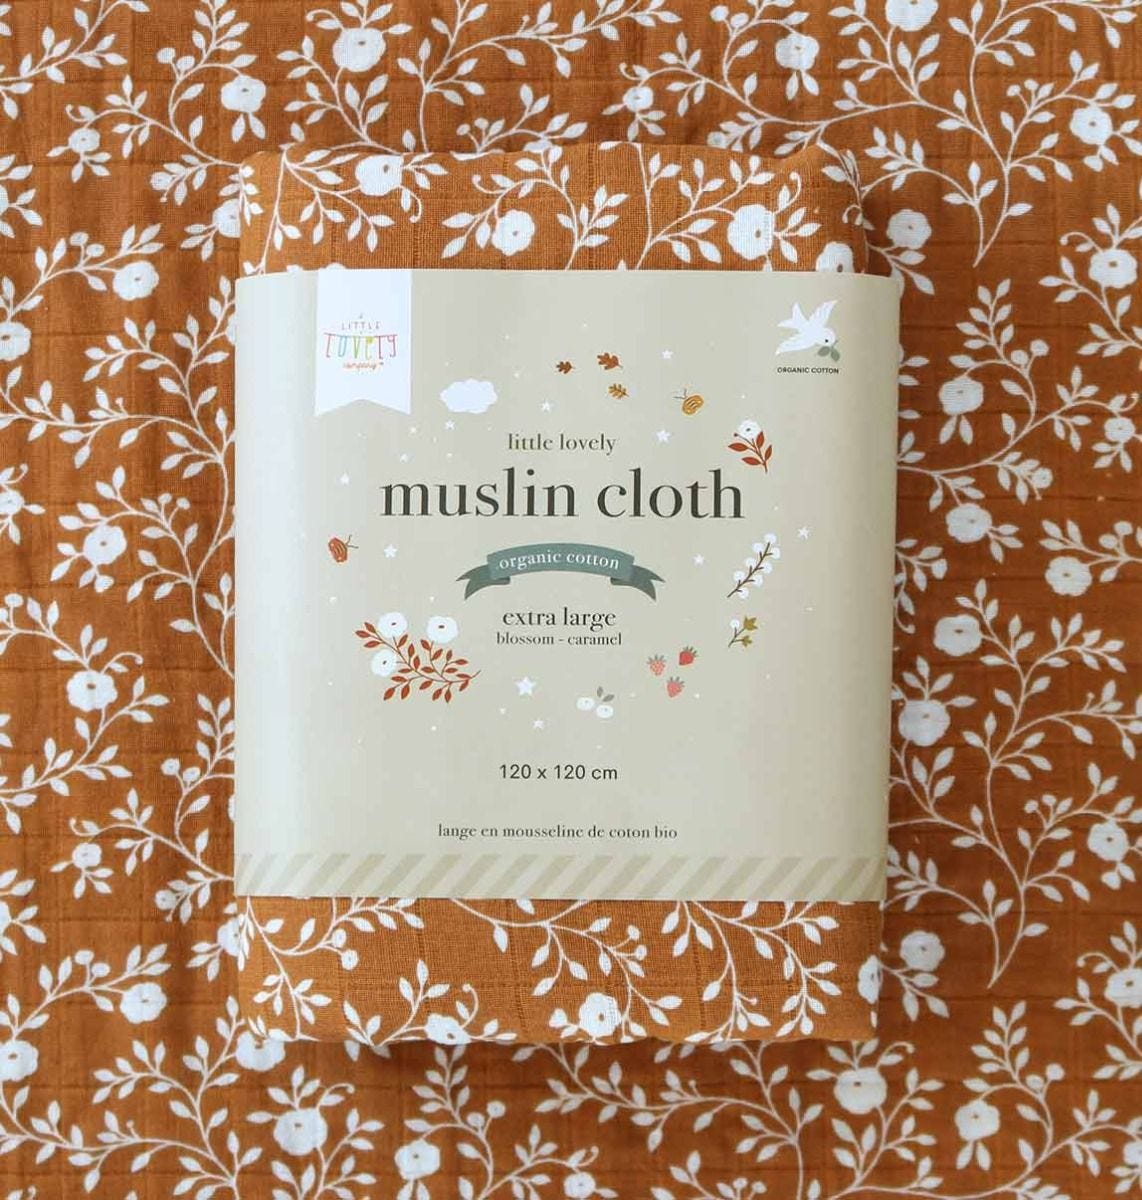 Muslin cloth XL: Blossom - caramel